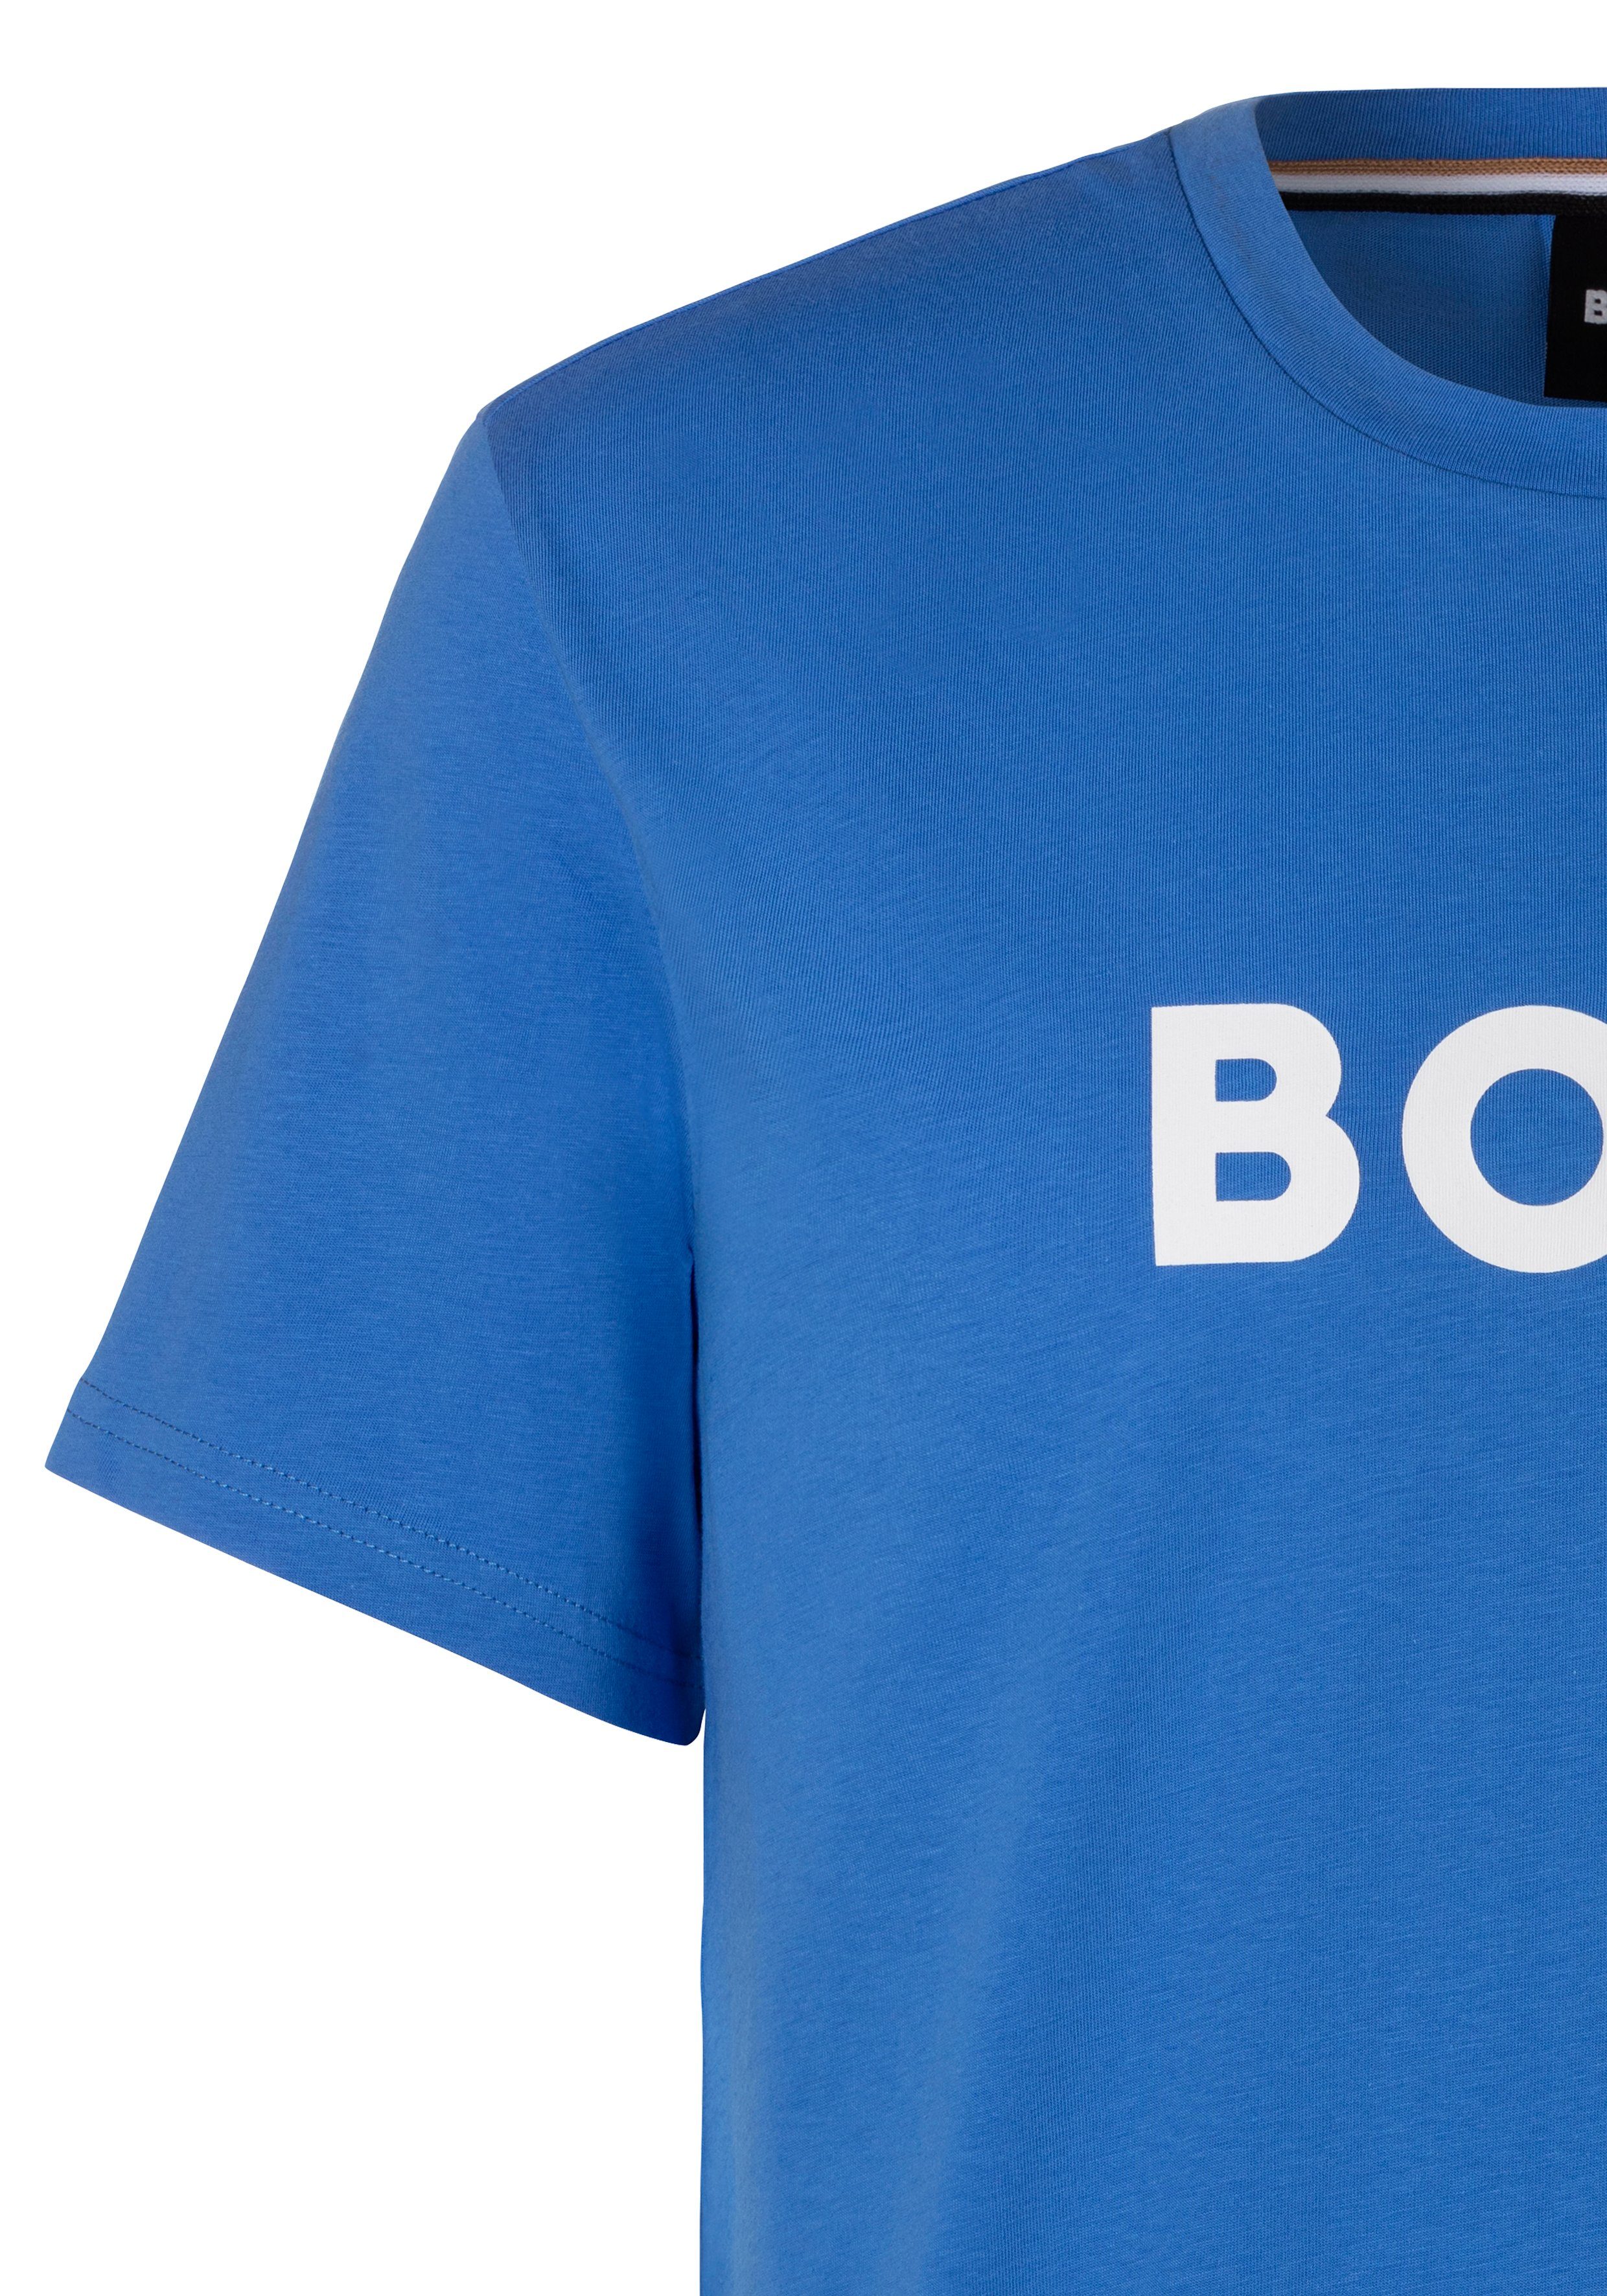 BOSS Blau T-Shirt